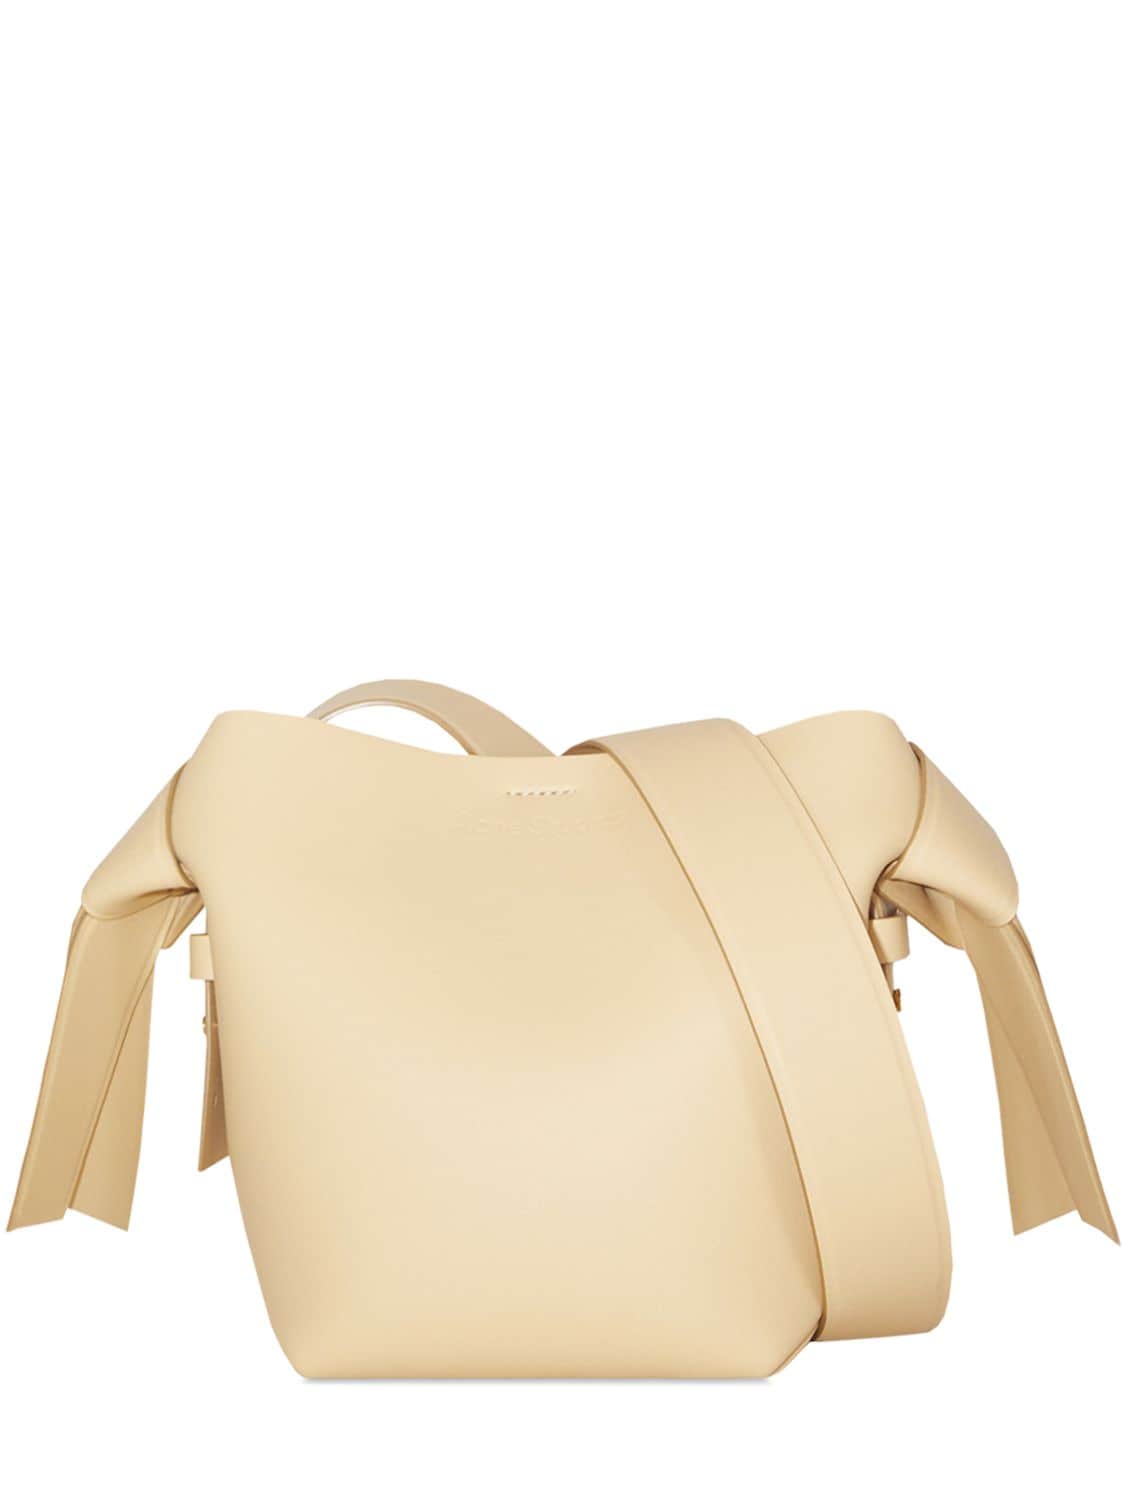 Acne Studios Mini Musubi Leather Top Handle Bag In Dune Beige